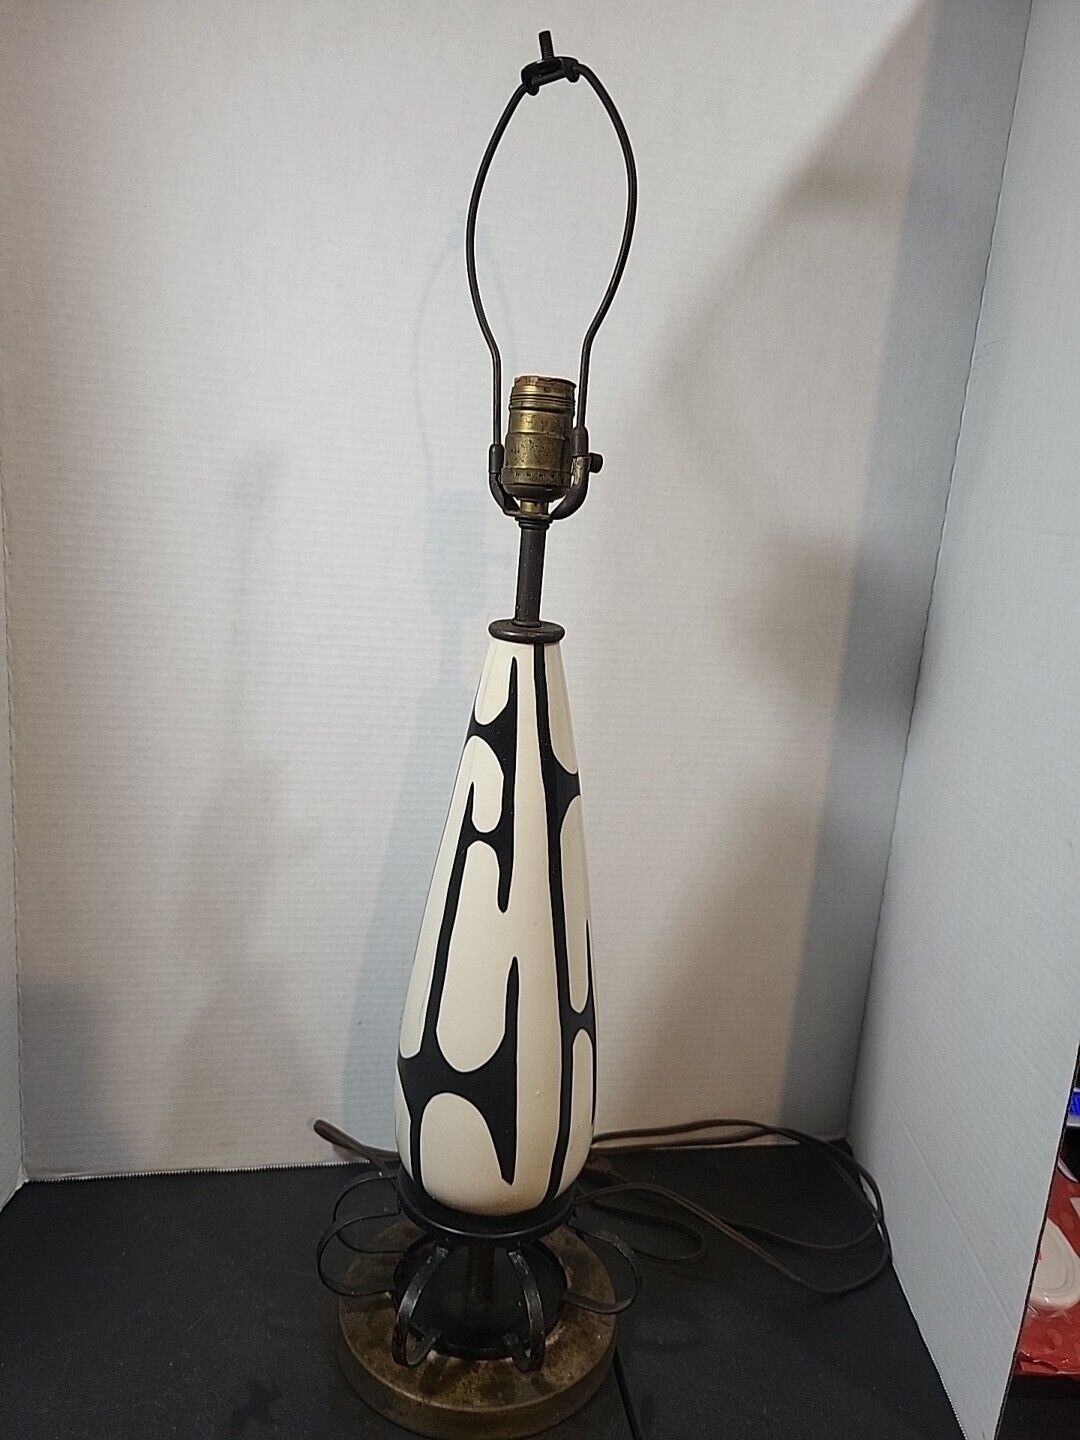 VTG Table lamp Brass Bottom With Black MetalArt deco Black/white MCM FLAW